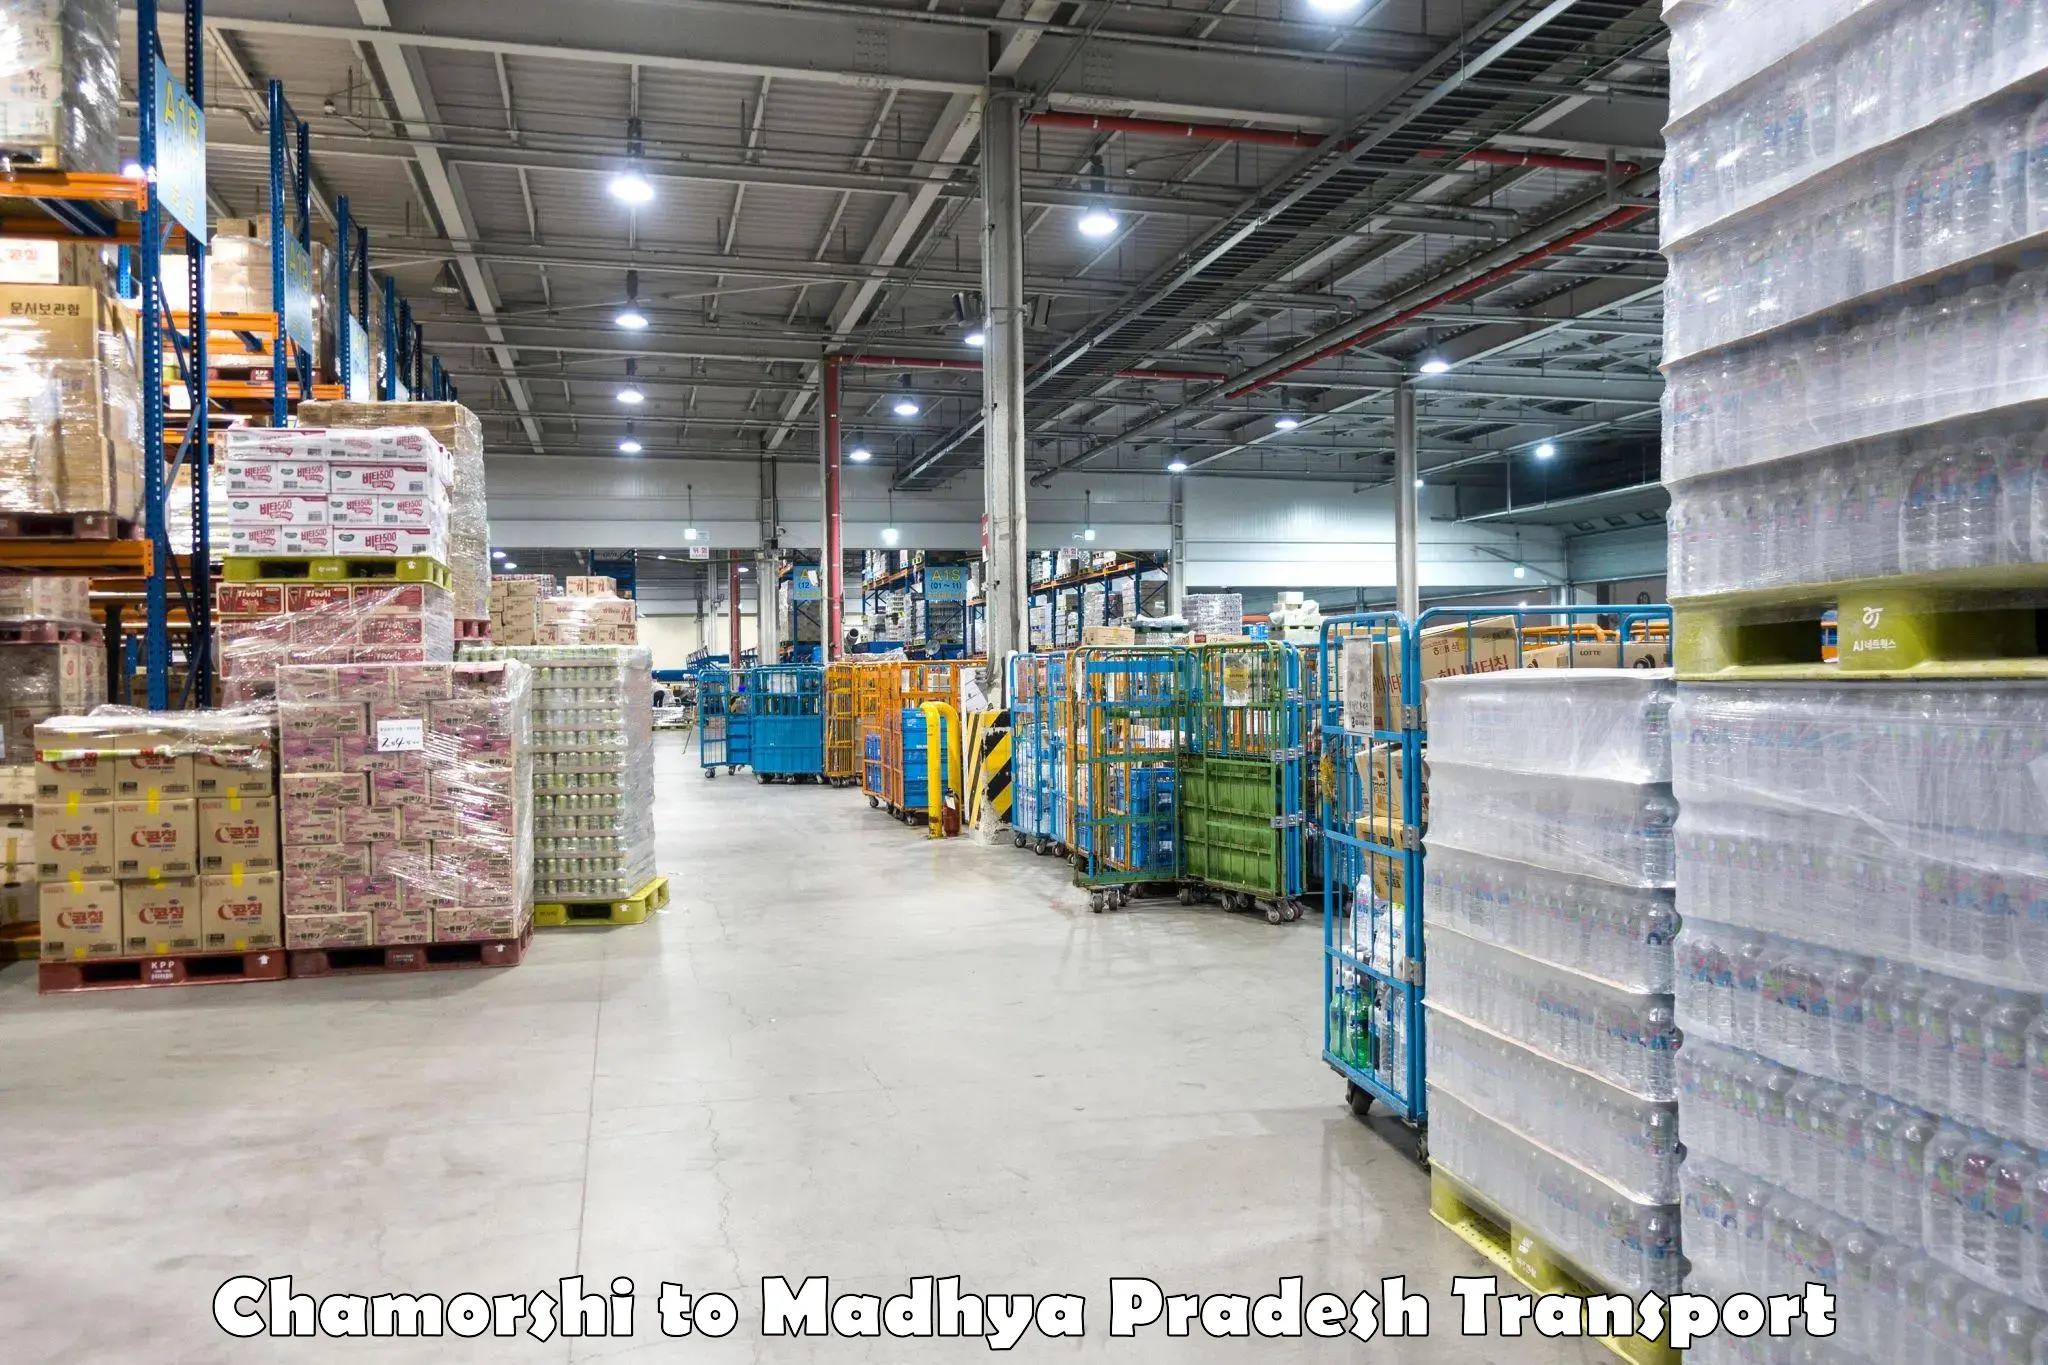 Truck transport companies in India Chamorshi to Nalkheda